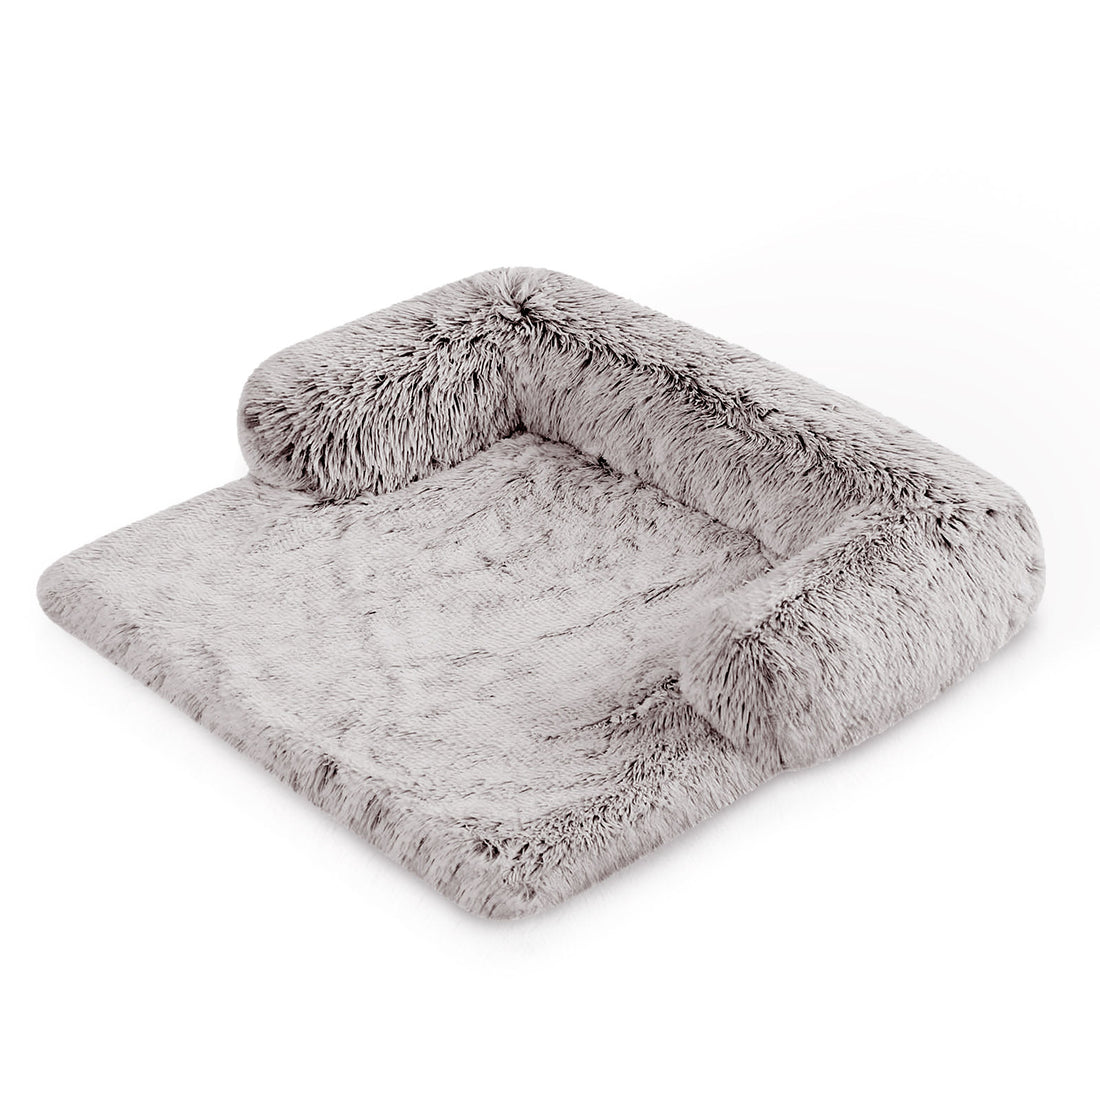 Pet Sofa Bed Dog Calming Sofa Cover Protector Cushion Plush Mat S-Pet Beds-PEROZ Accessories